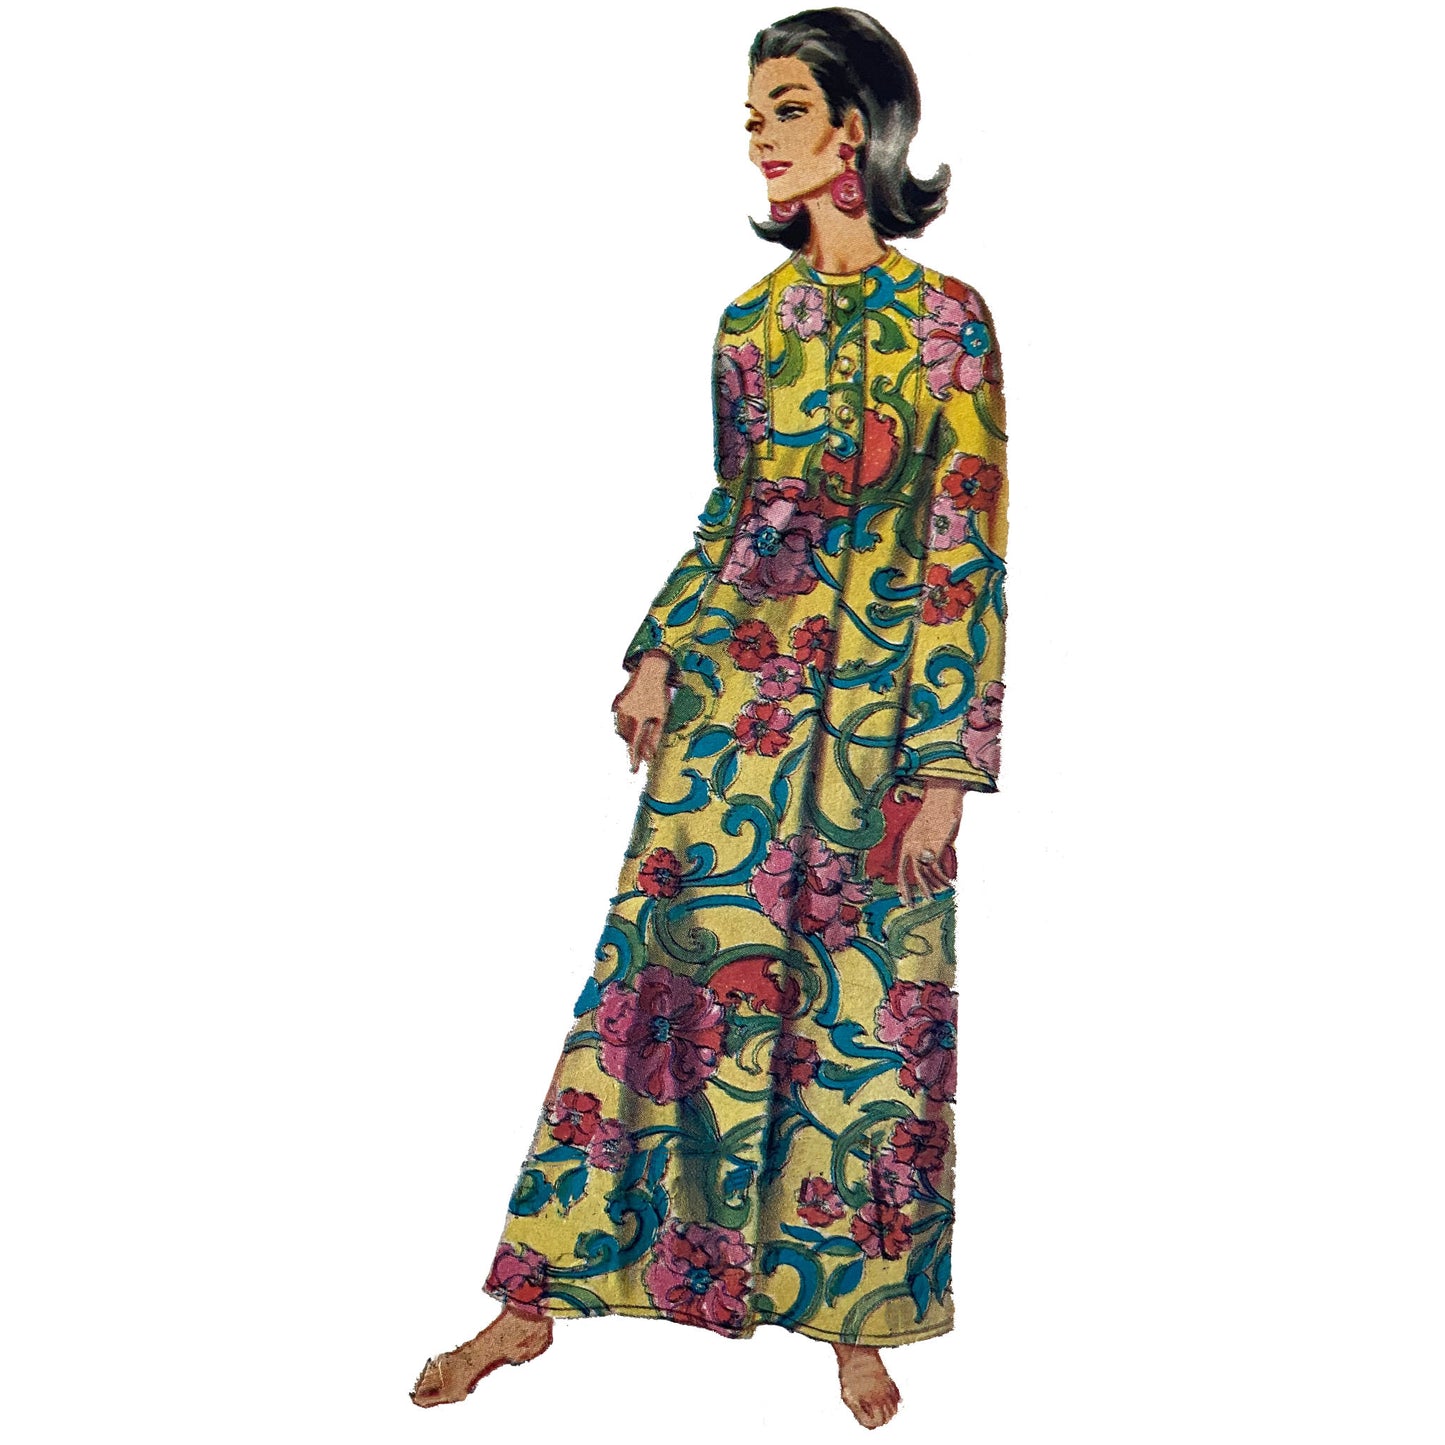 Model wearing dress or caftan made from Butterick 4238 pattern